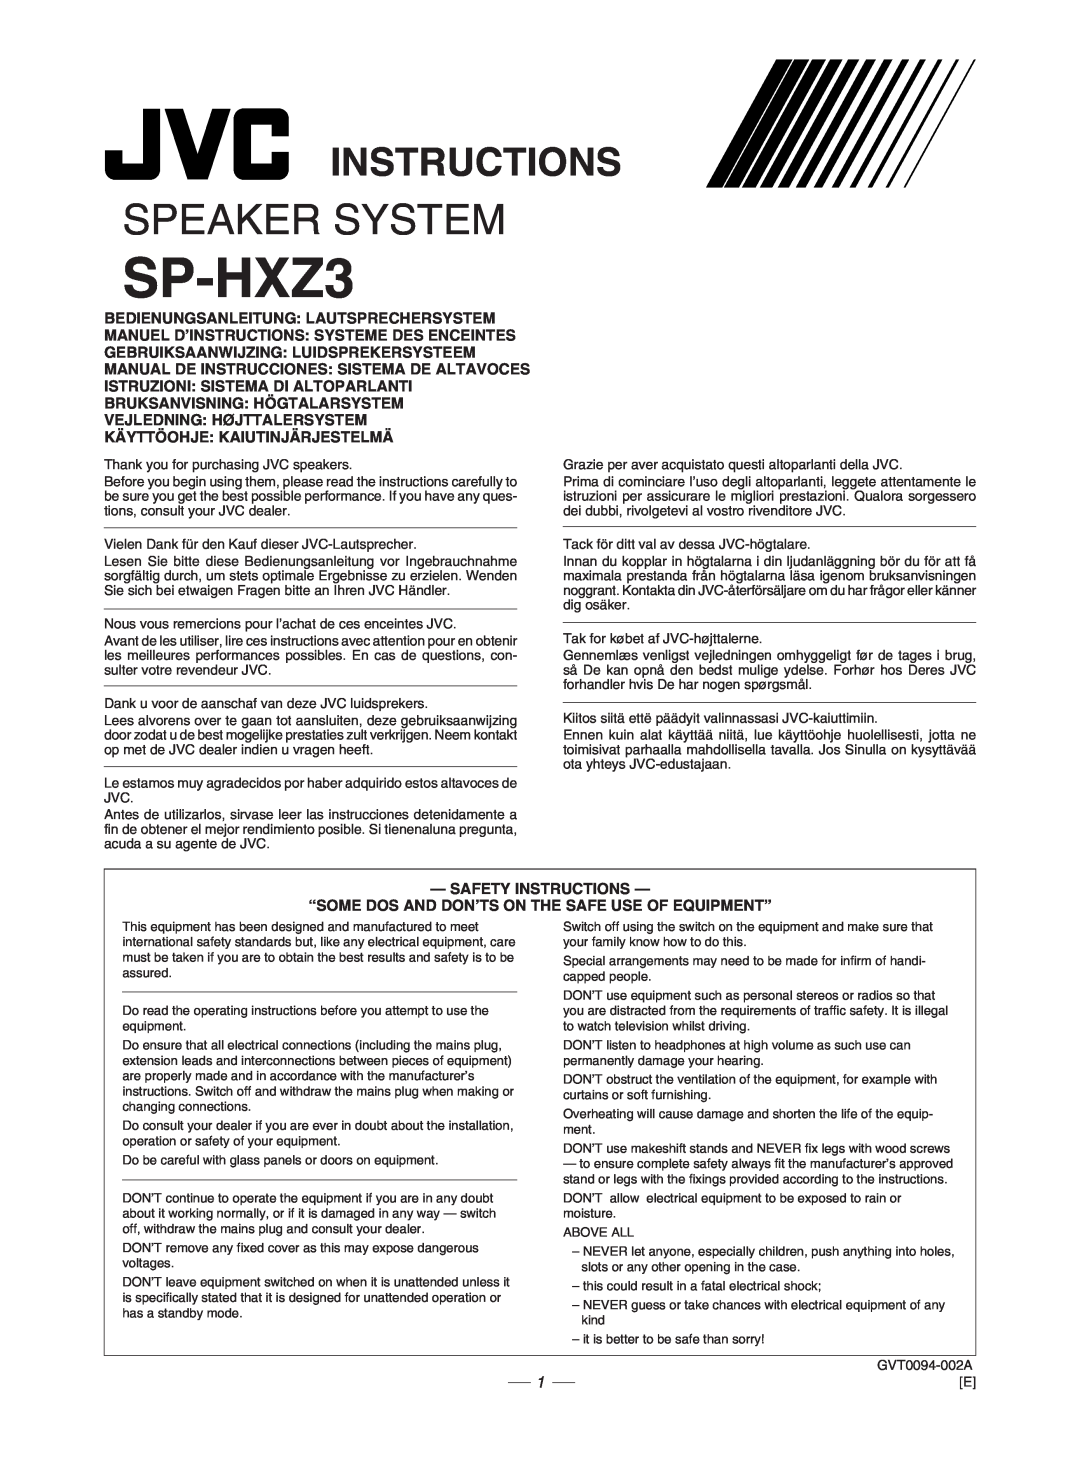 JVC GVT0086-008A, CA-HXZ3R manual Instructions, SP-HXZ3, Speaker System 